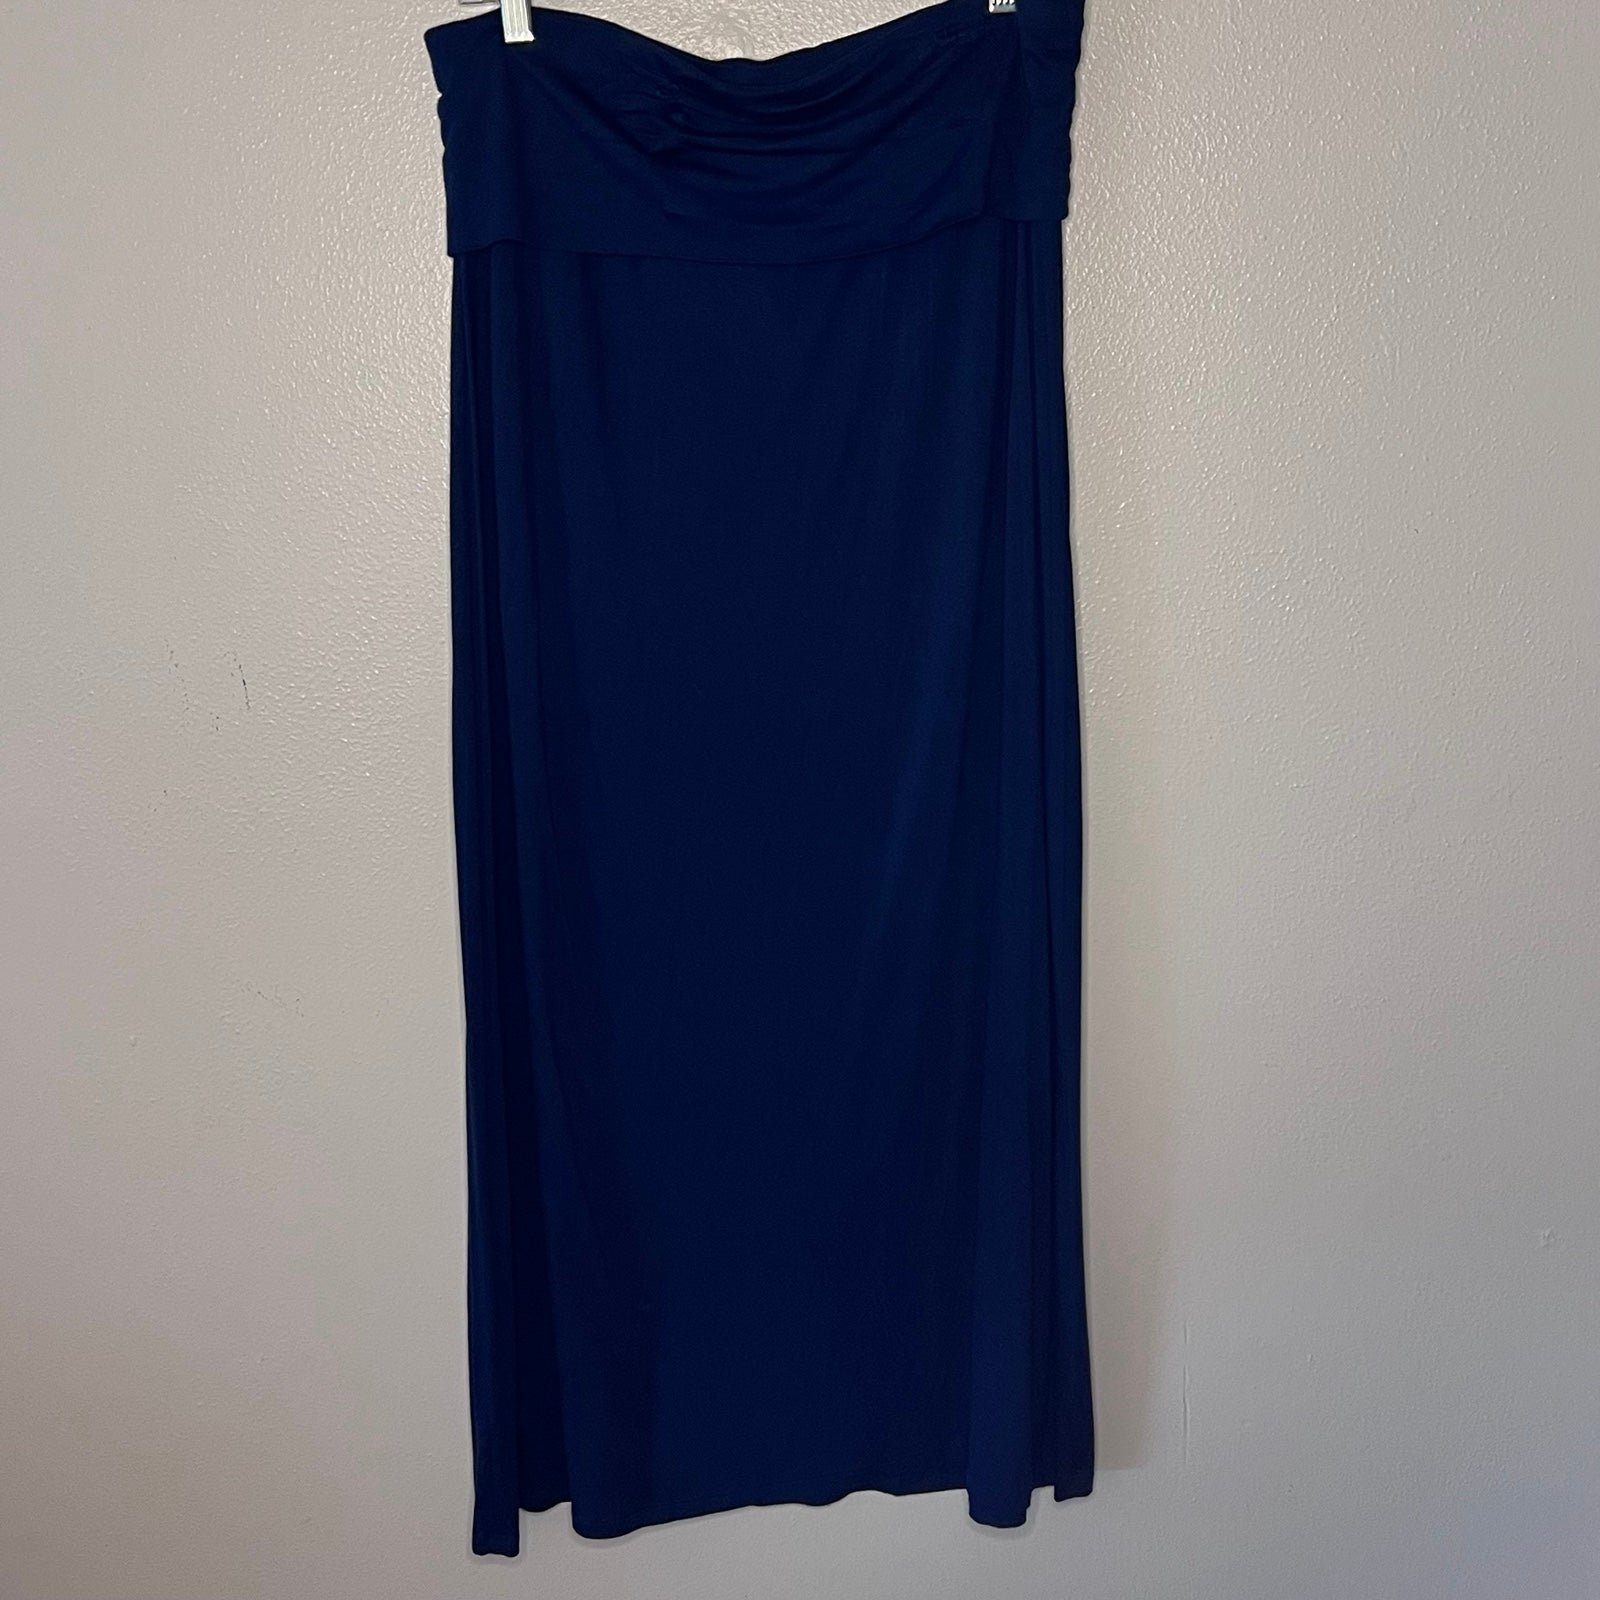 Gorgeous Ana Blue Maxi Long Skirt Petite Large KisZiyjAL Discount